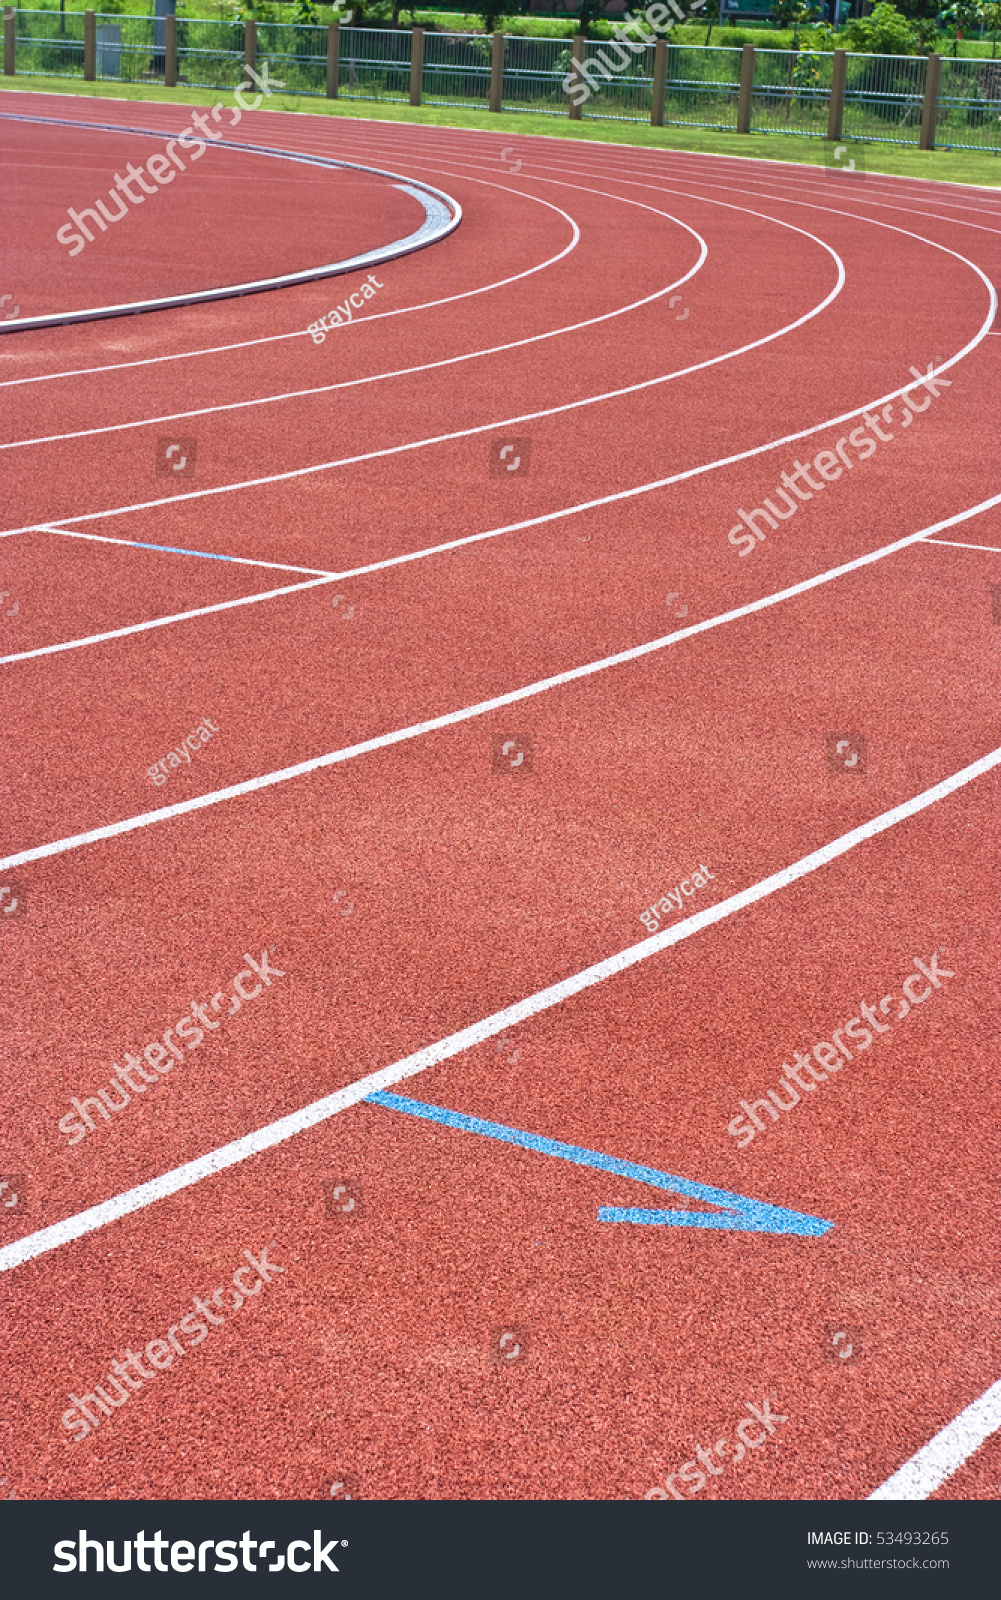 A university running track, around an football field. #53493265